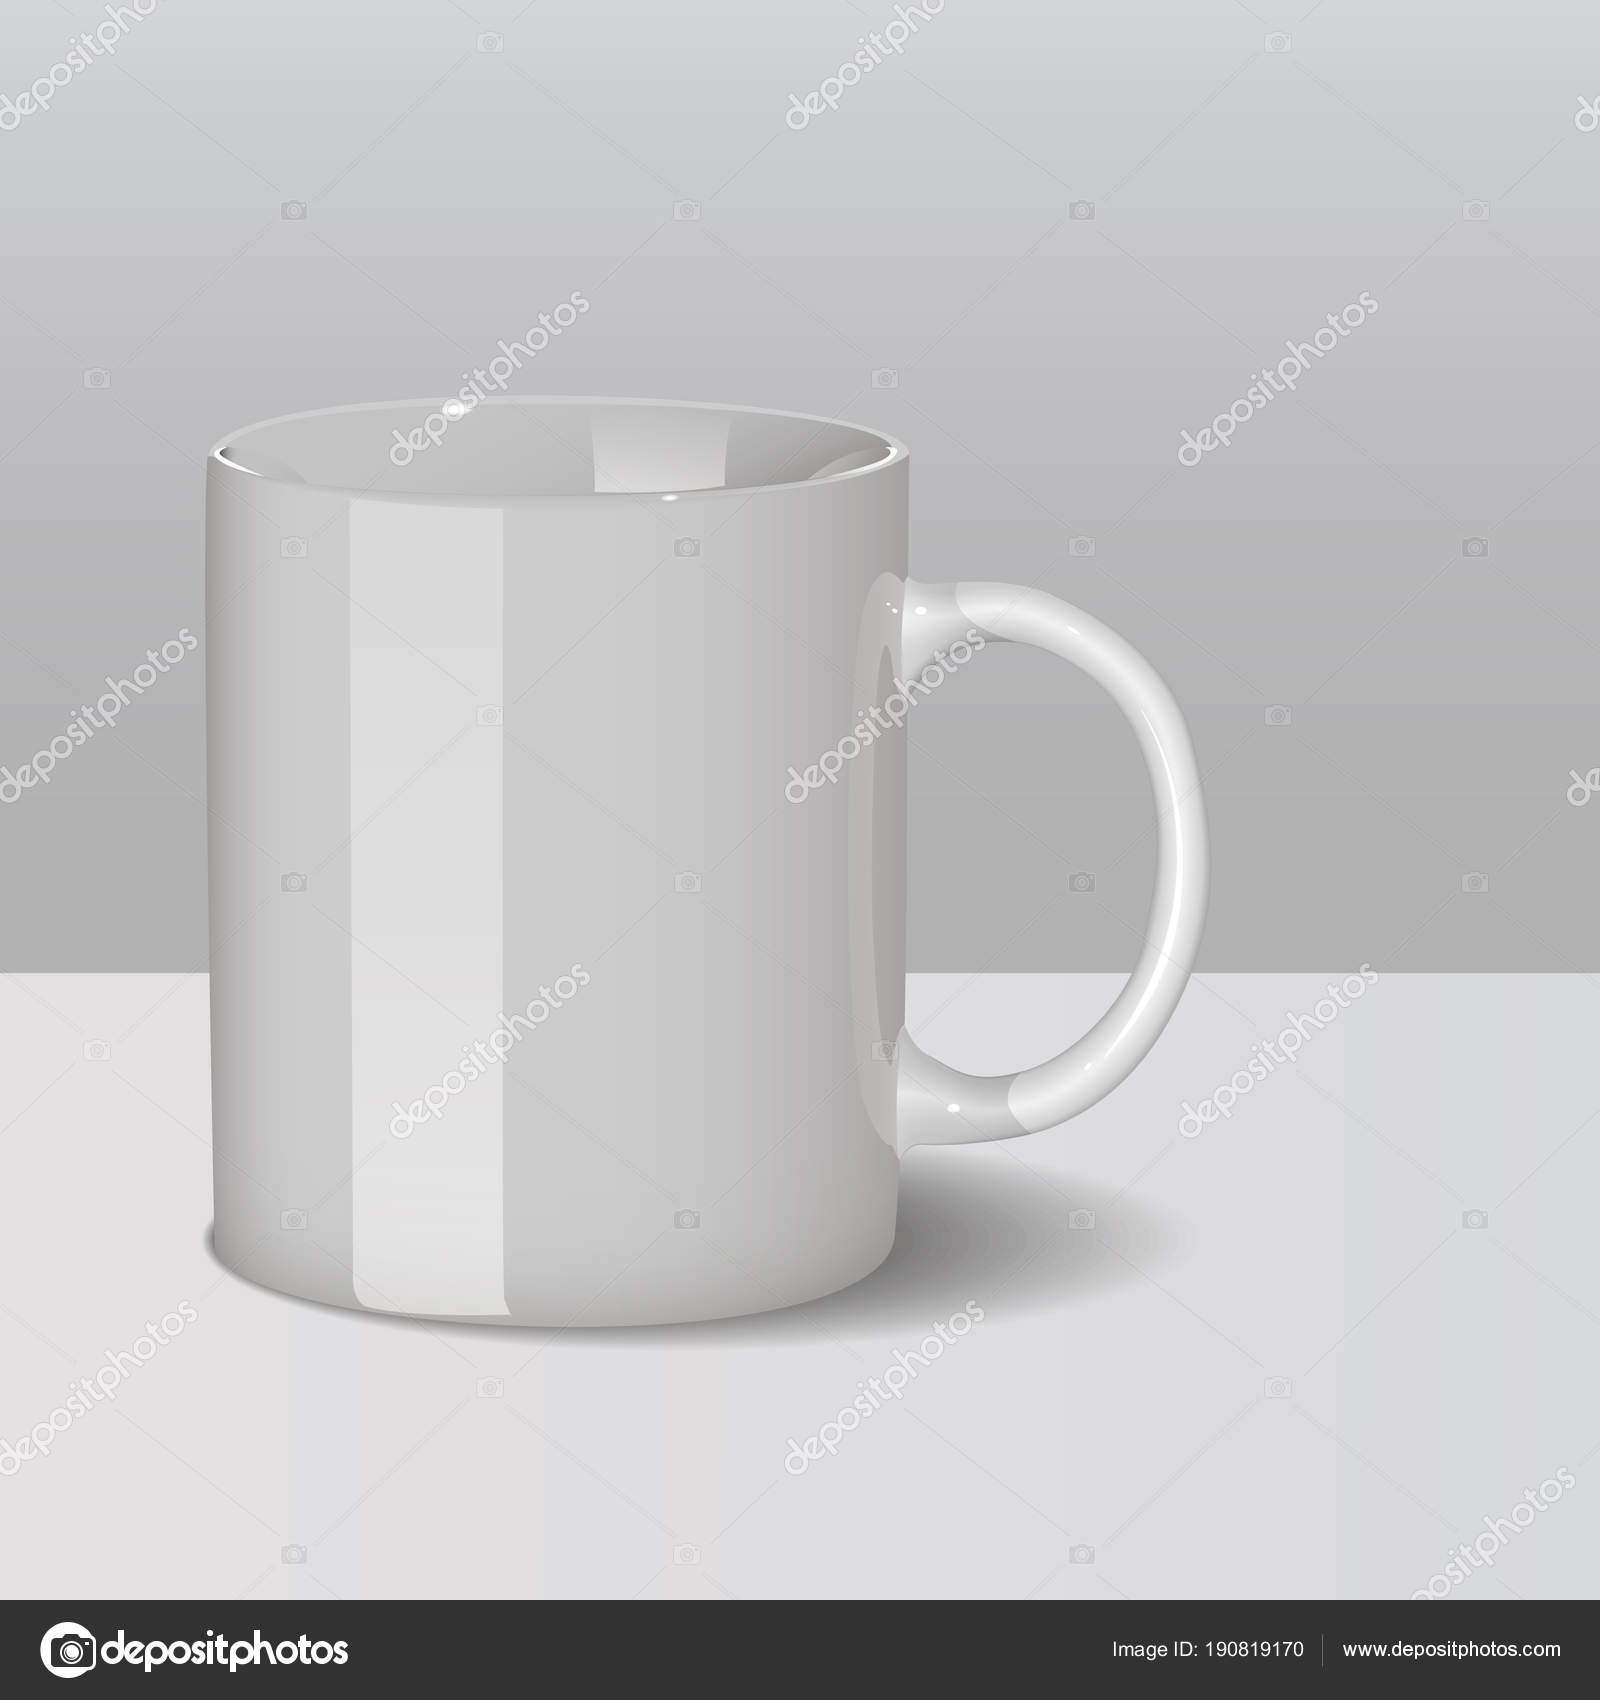 https://st3.depositphotos.com/8480770/19081/v/1600/depositphotos_190819170-stock-illustration-photo-realistic-white-cup-isolated.jpg